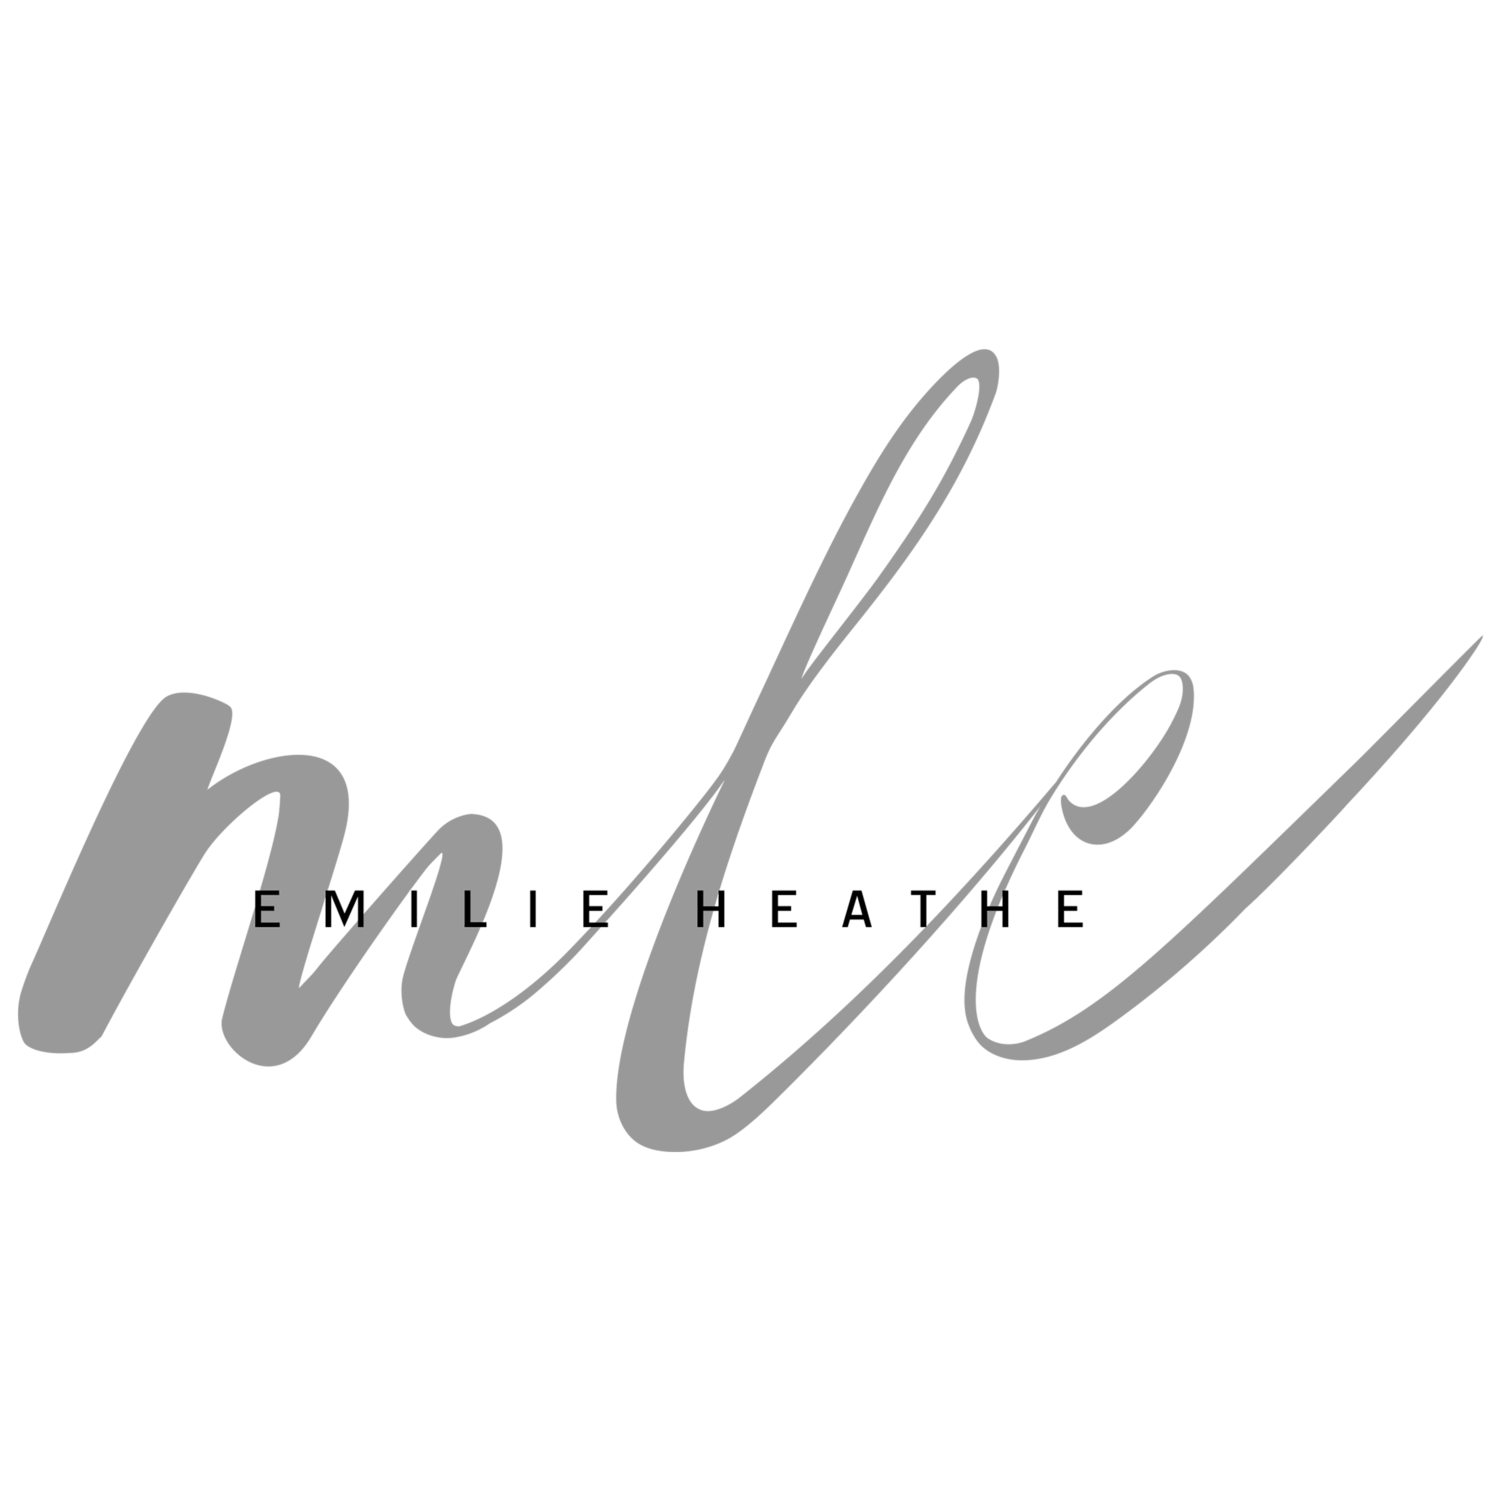 Emilie Heathe mobile logo